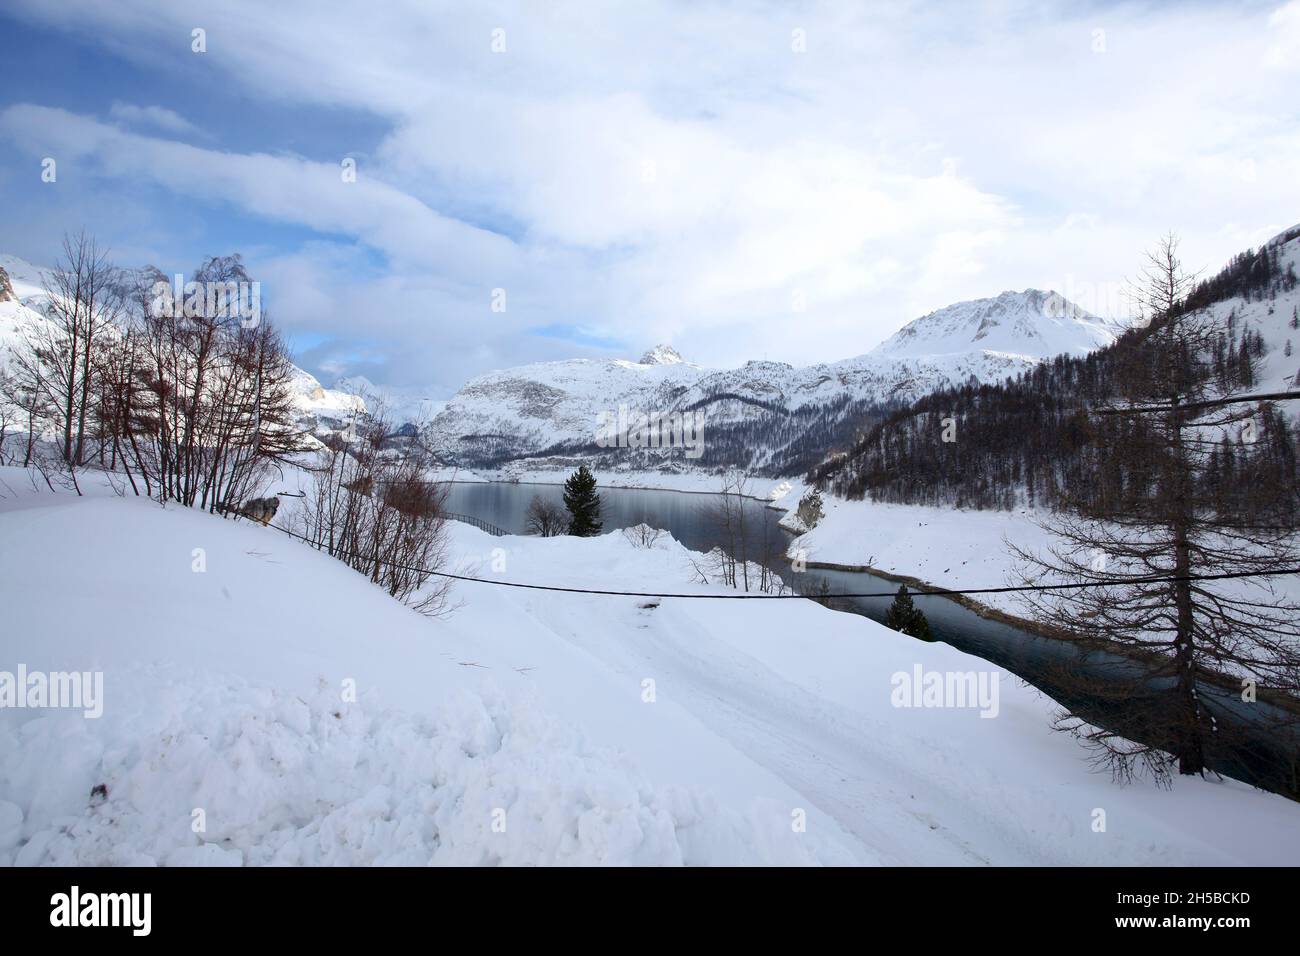 Tignes, France, Ski resort snowscape Stock Photo